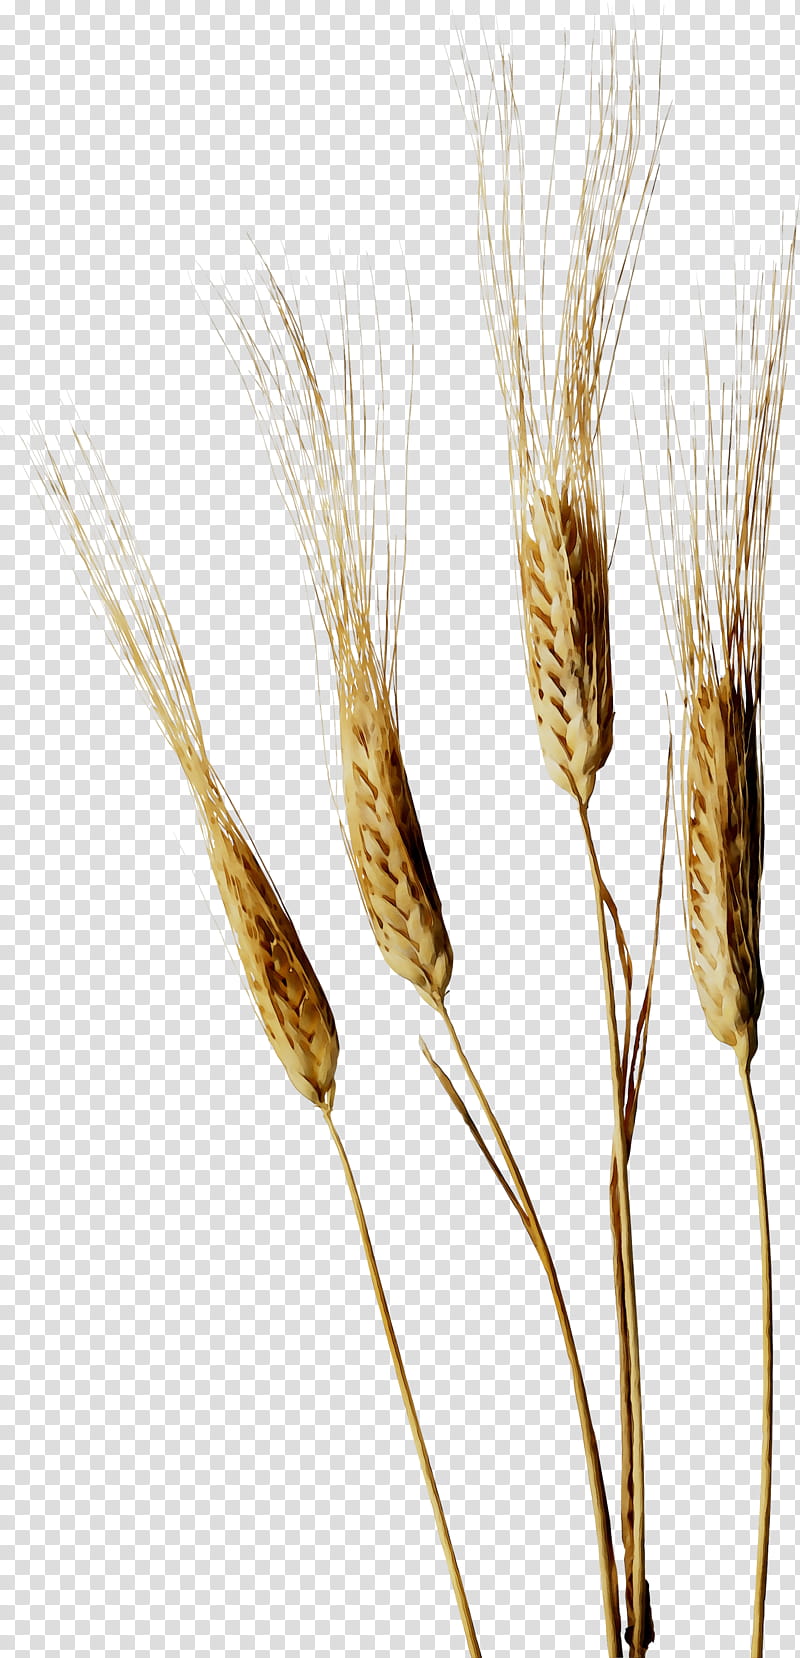 Wheat, Emmer, Einkorn Wheat, Cereal Germ, Grain, Rye, Barleys, Nikon Z 7 transparent background PNG clipart